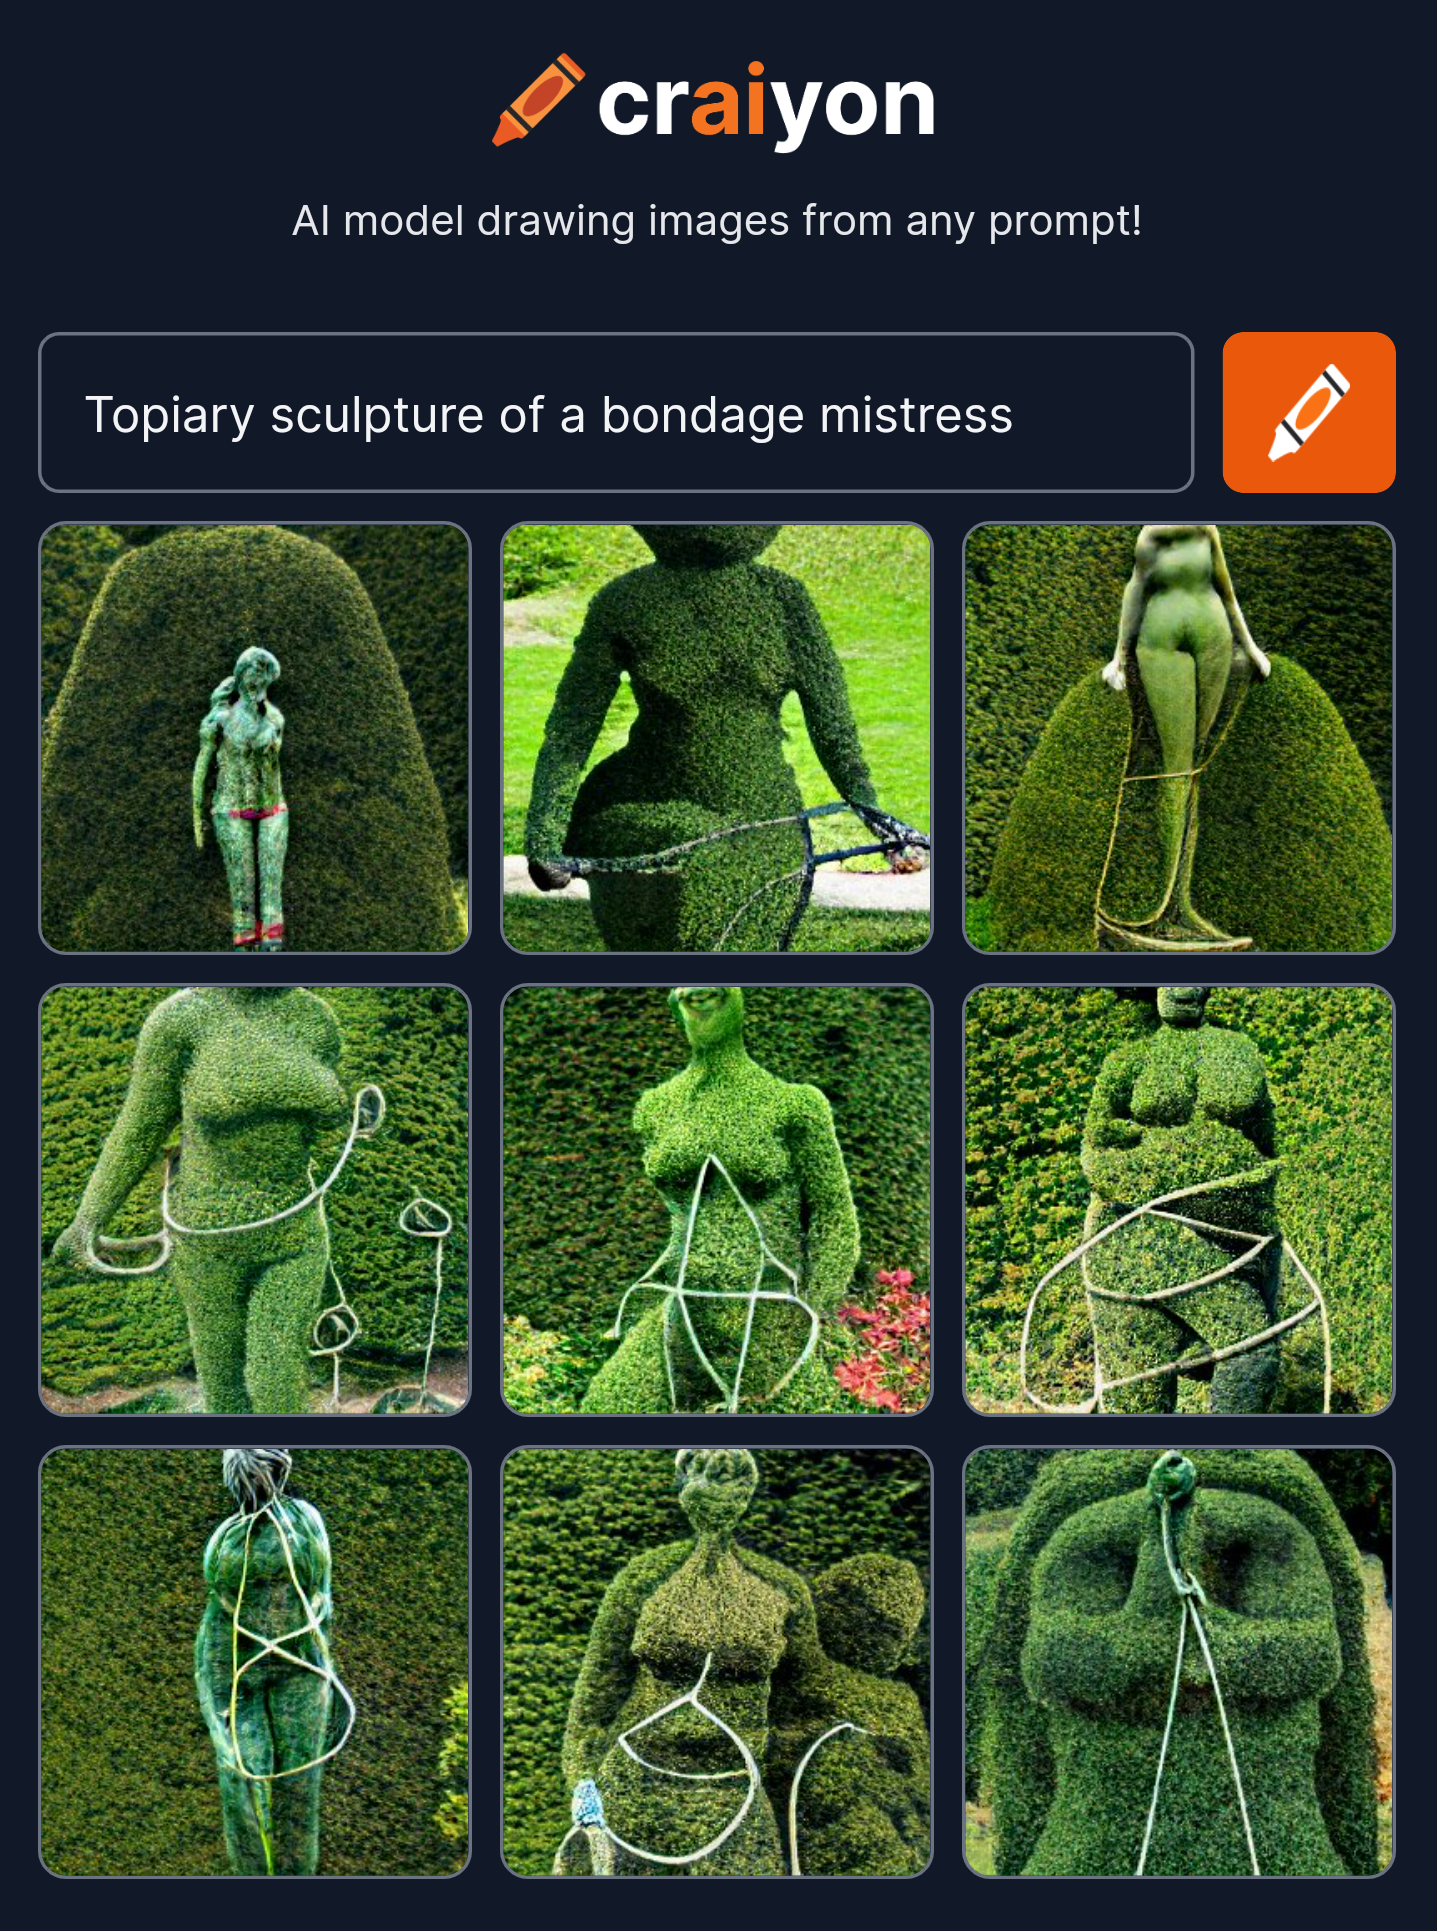 craiyon_013912_Topiary_sculpture_of_a_bondage_mistress.png